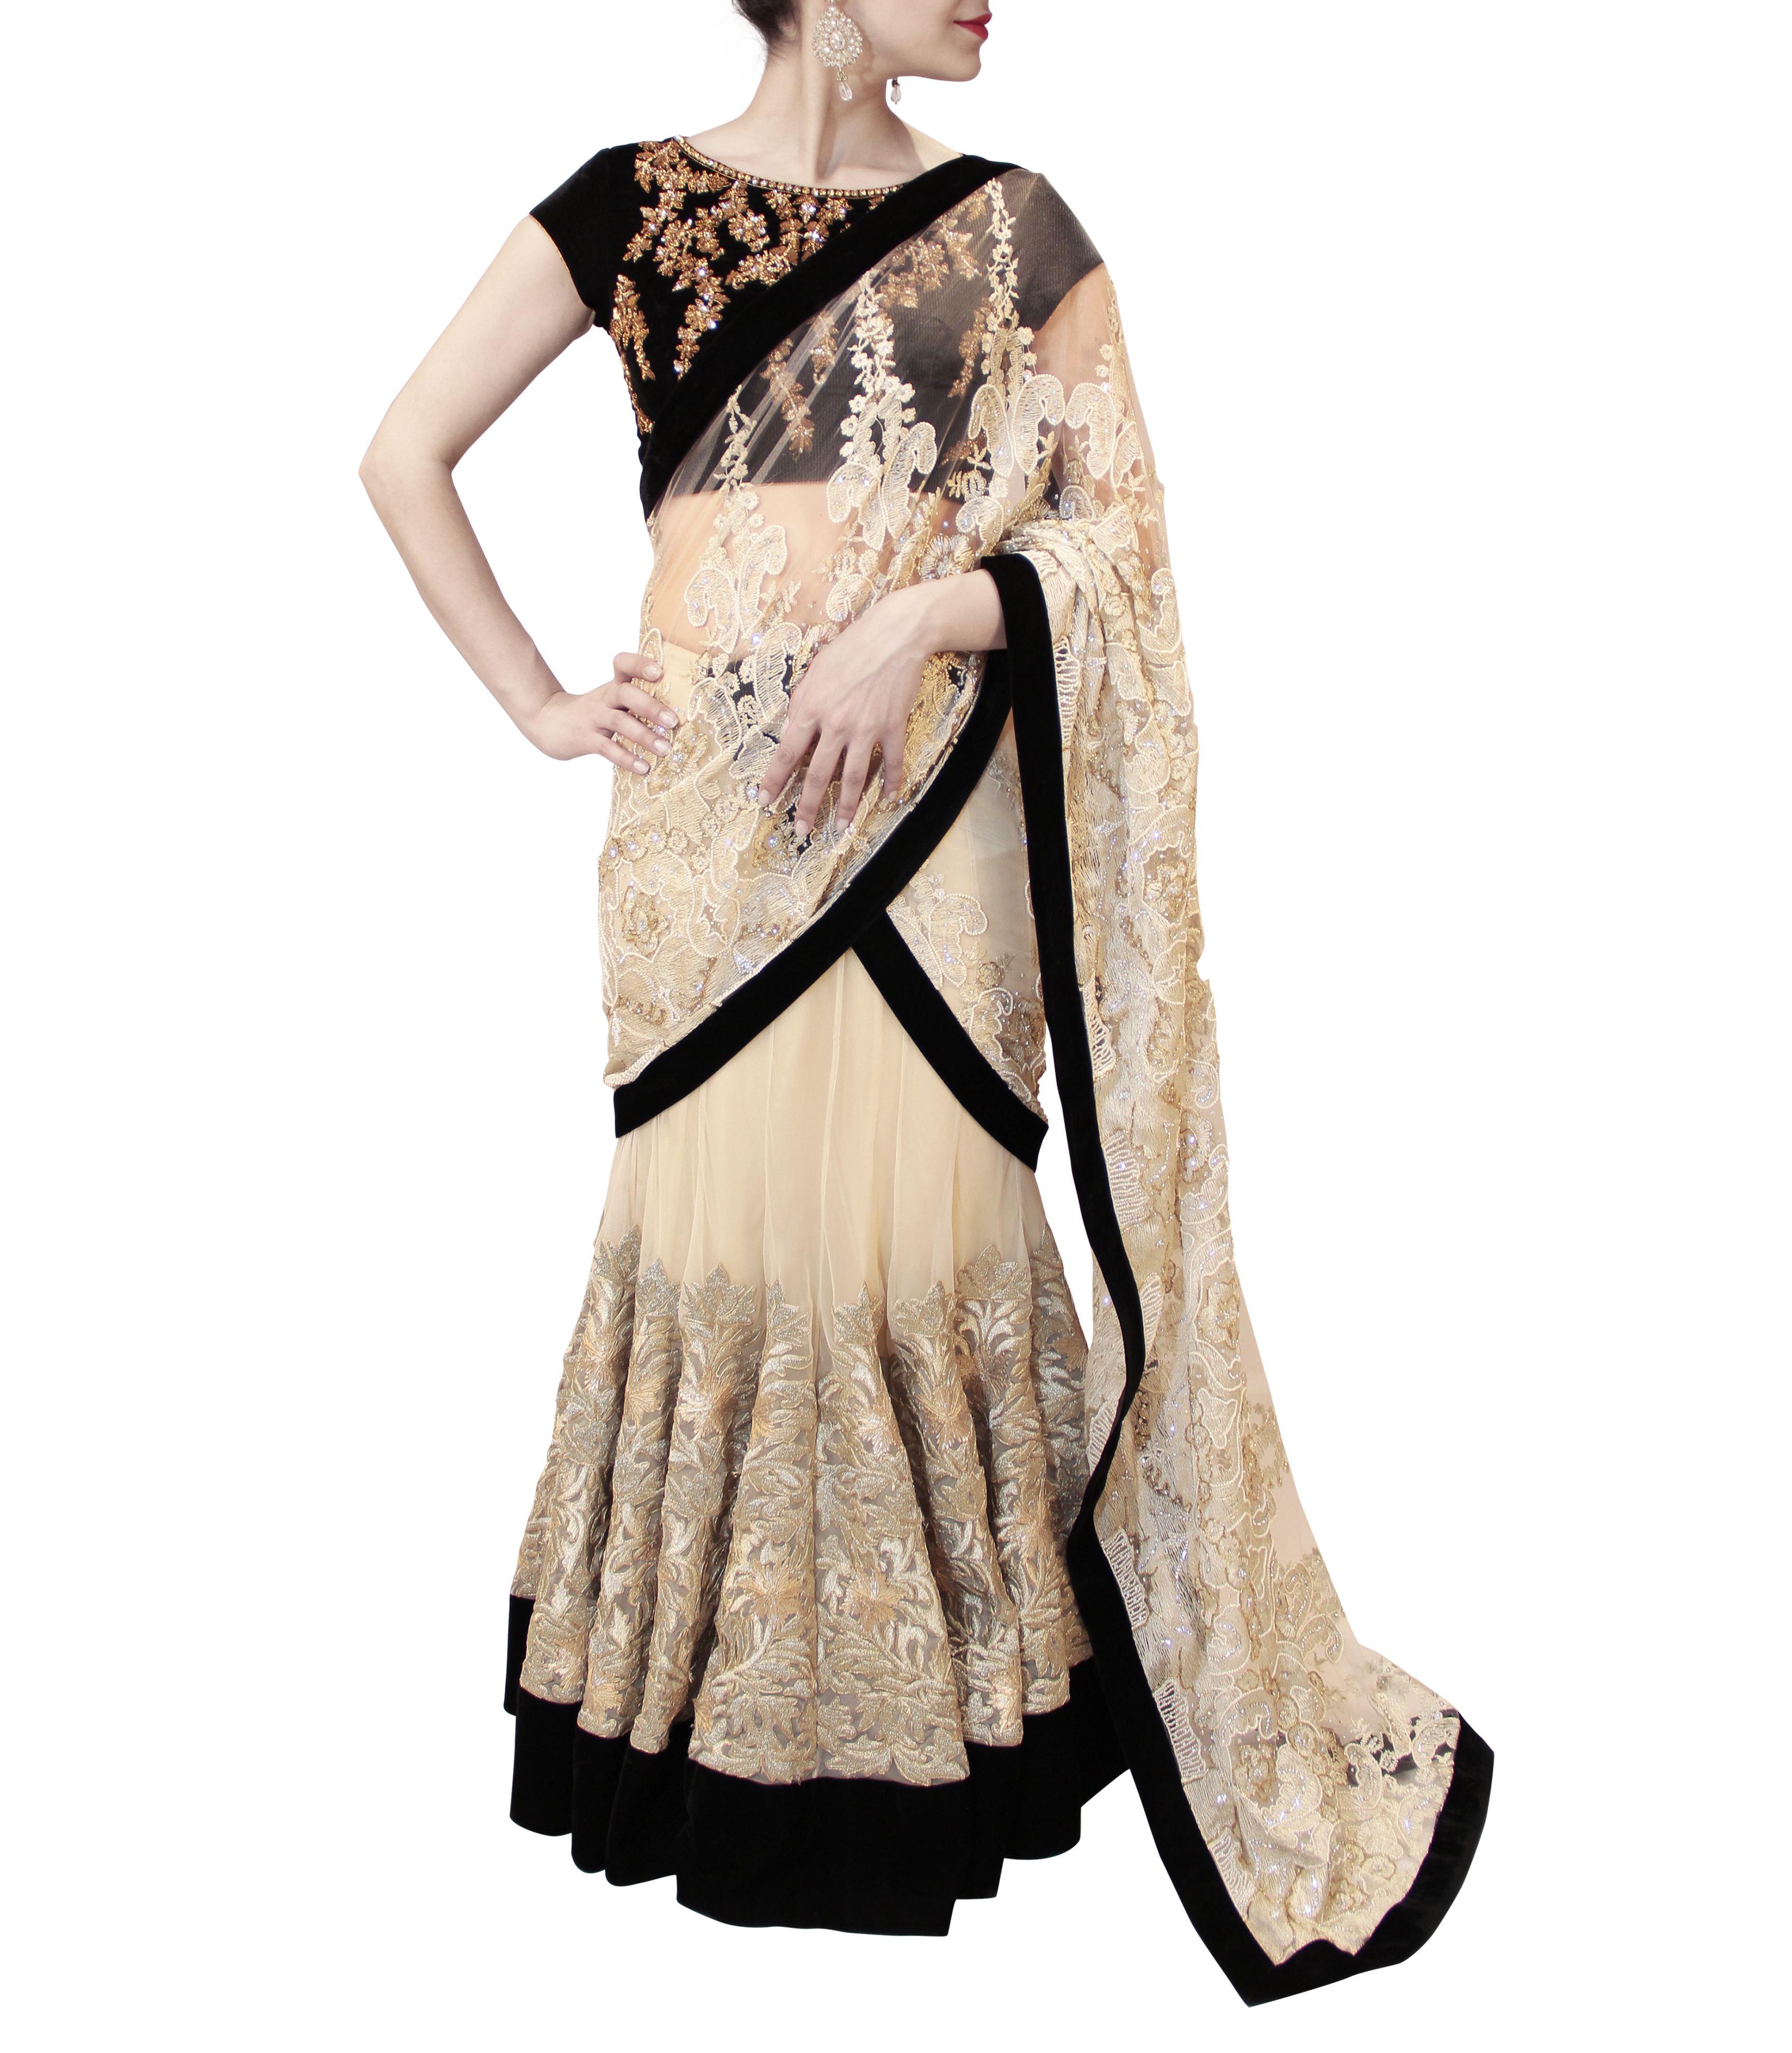 Off White Lehenga Choli Indian Embroidered Lengha For Wedding Party Dress |  eBay